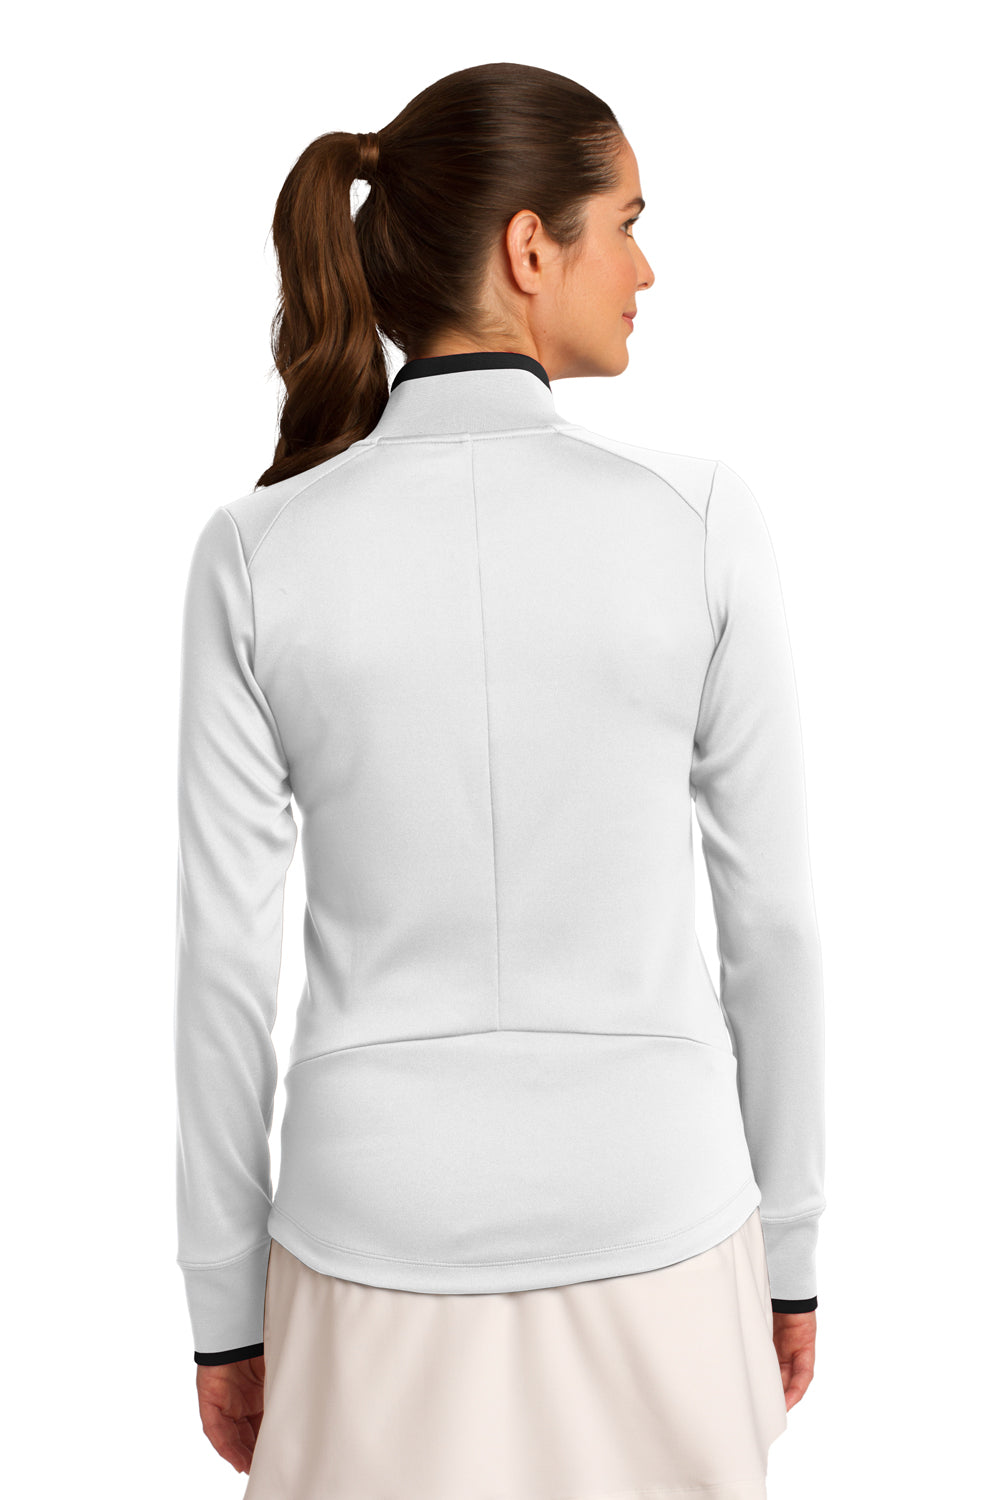 Nike 578674 Womens Dri-Fit Moisture Wicking 1/4 Zip Sweatshirt White/Black Model Back